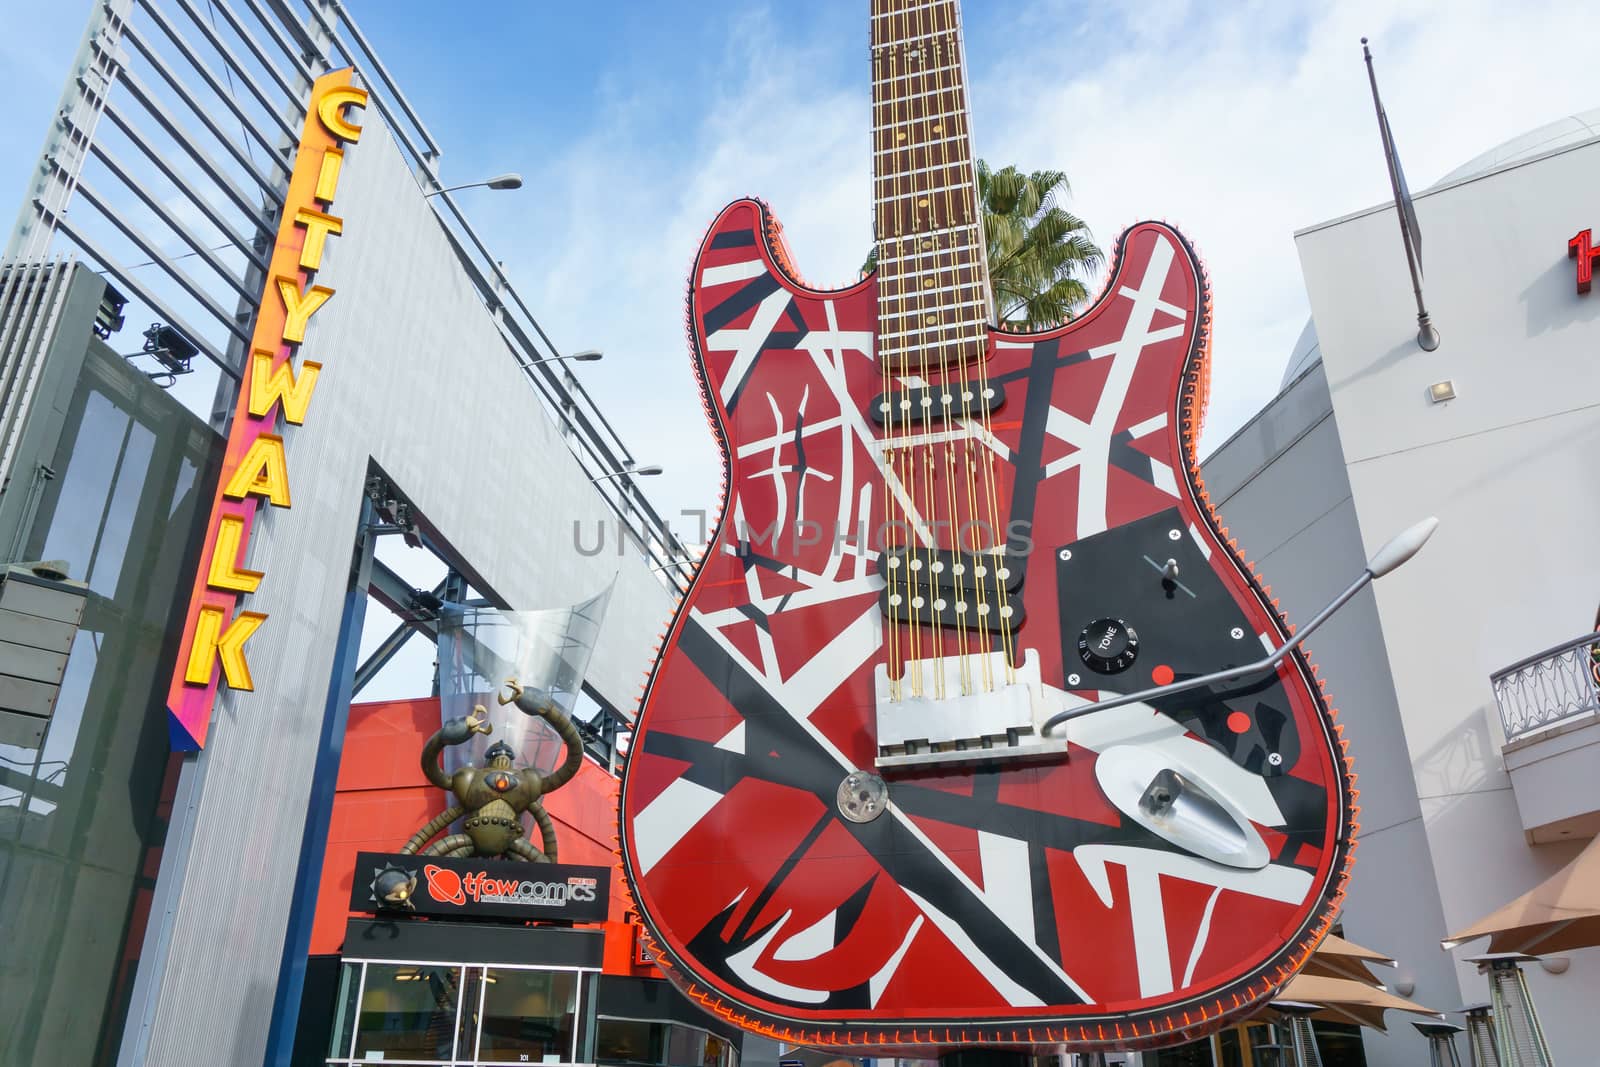 UNIVERSAL CITY, CA/USA DECEMBER 22, 2015: Guitar Sculpture at Universal CityWalk Hard Rock Cafe.